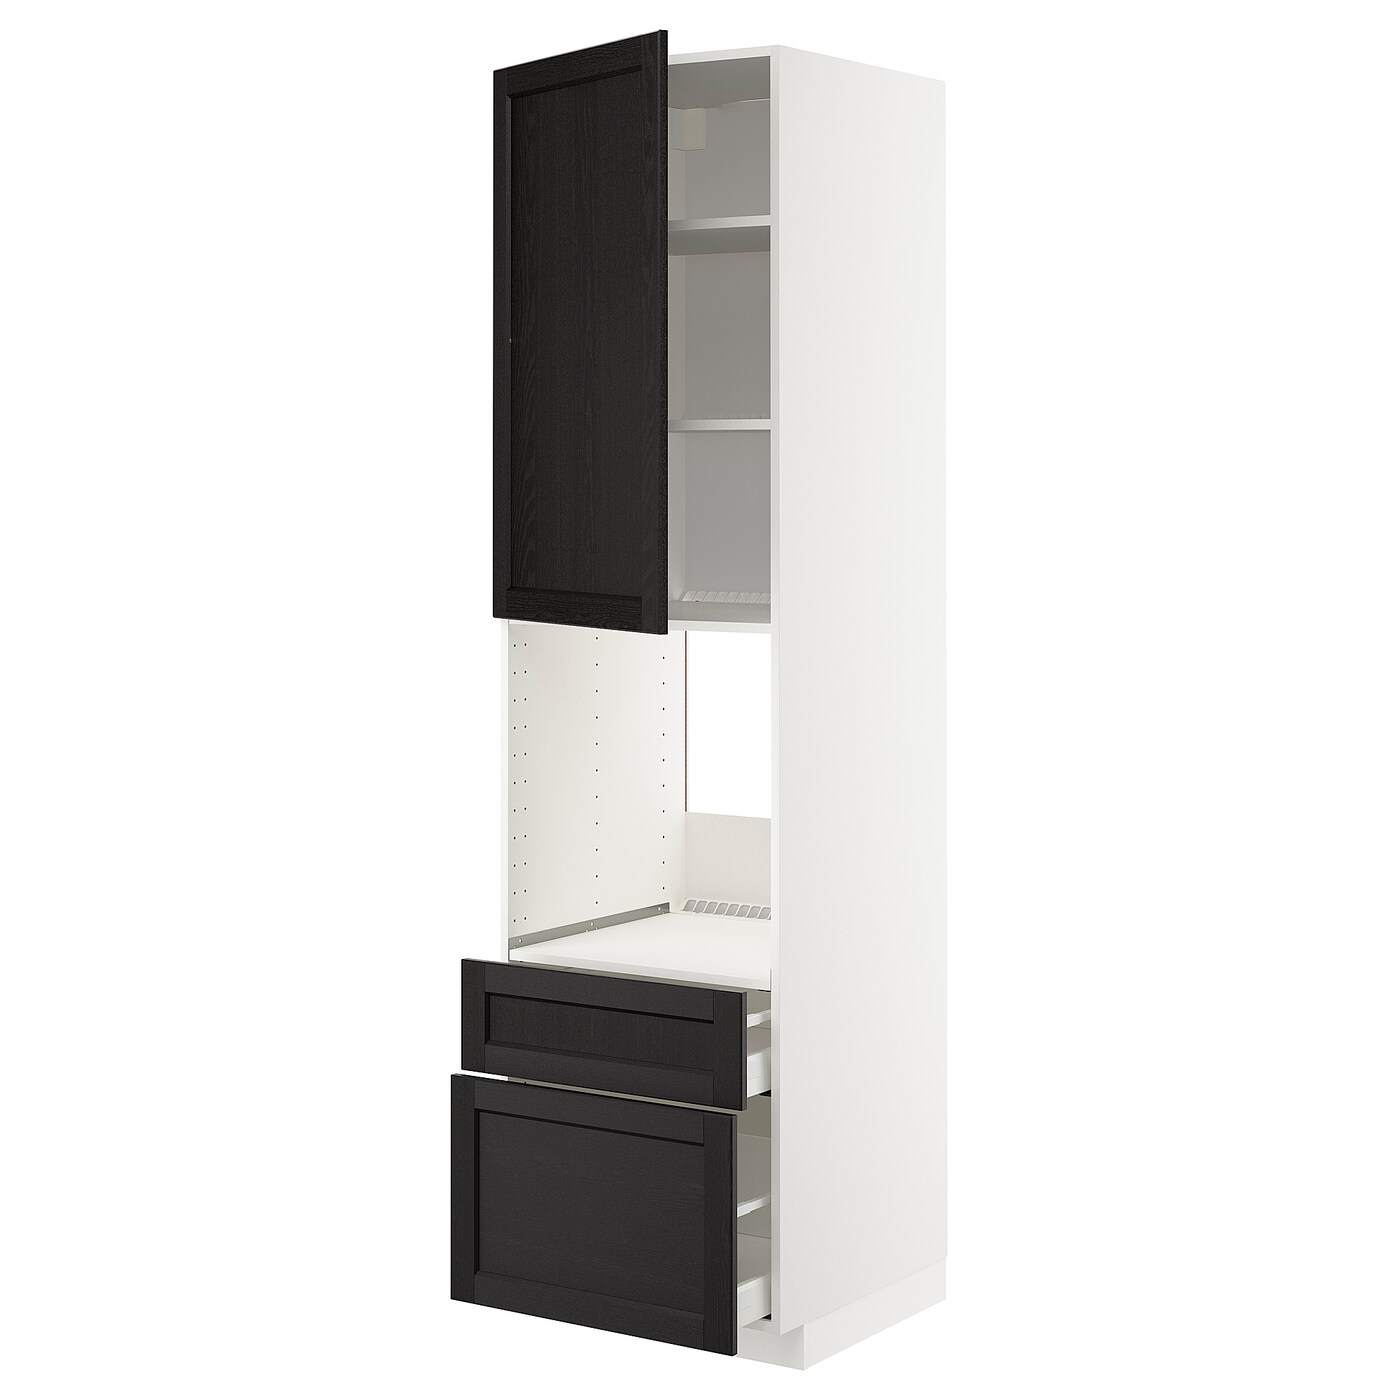 Кухонный шкаф-пенал - IKEA METOD/МЕТОД ИКЕА, 220х60х60 см, черный/белый